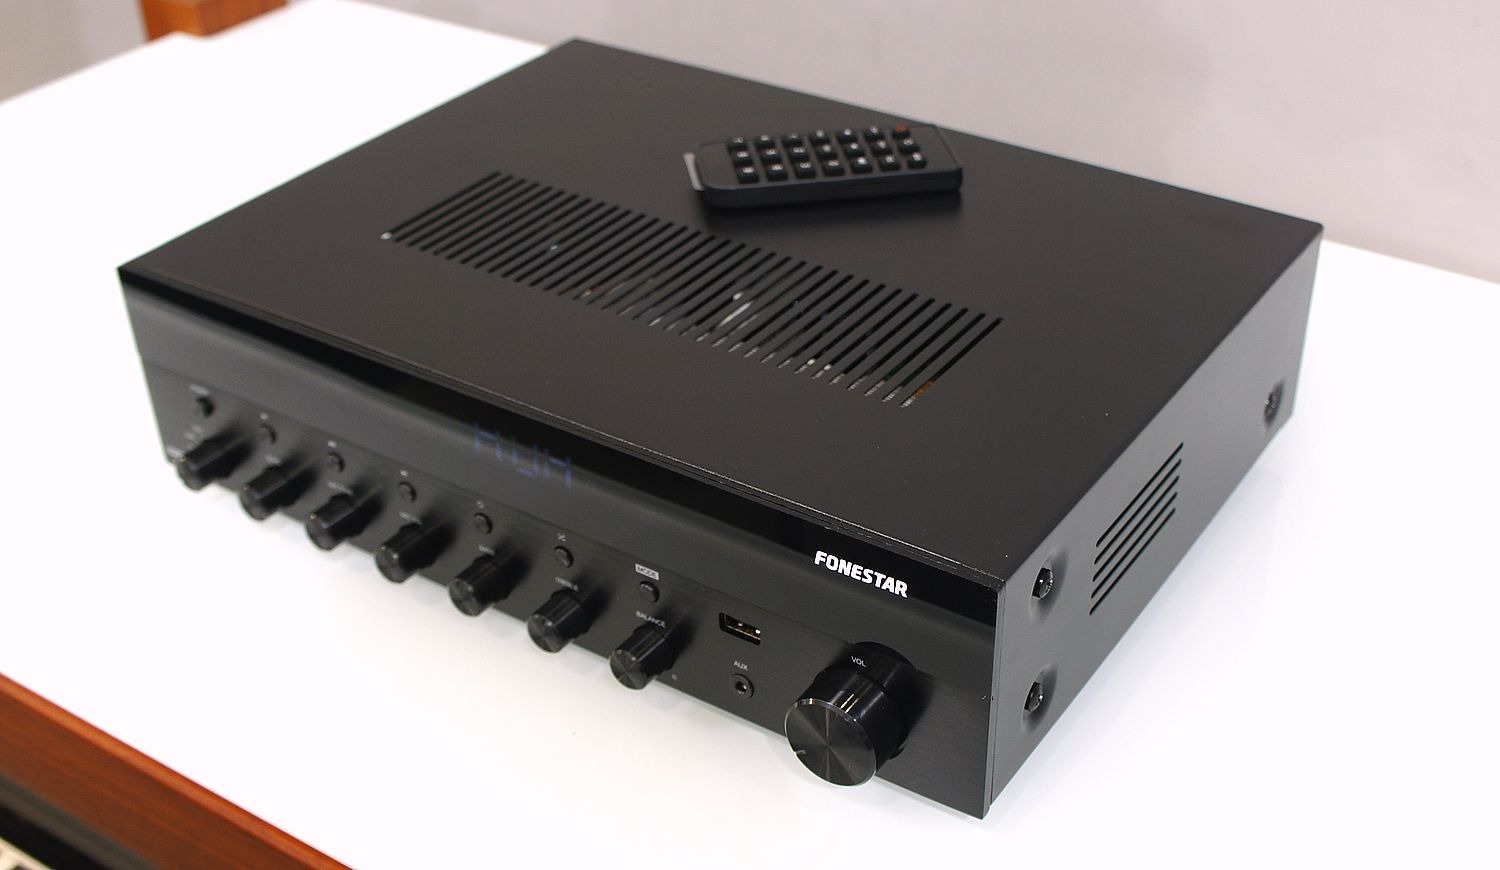 Amplificador estéreo Bluetooth®/USB/FM AS-3030